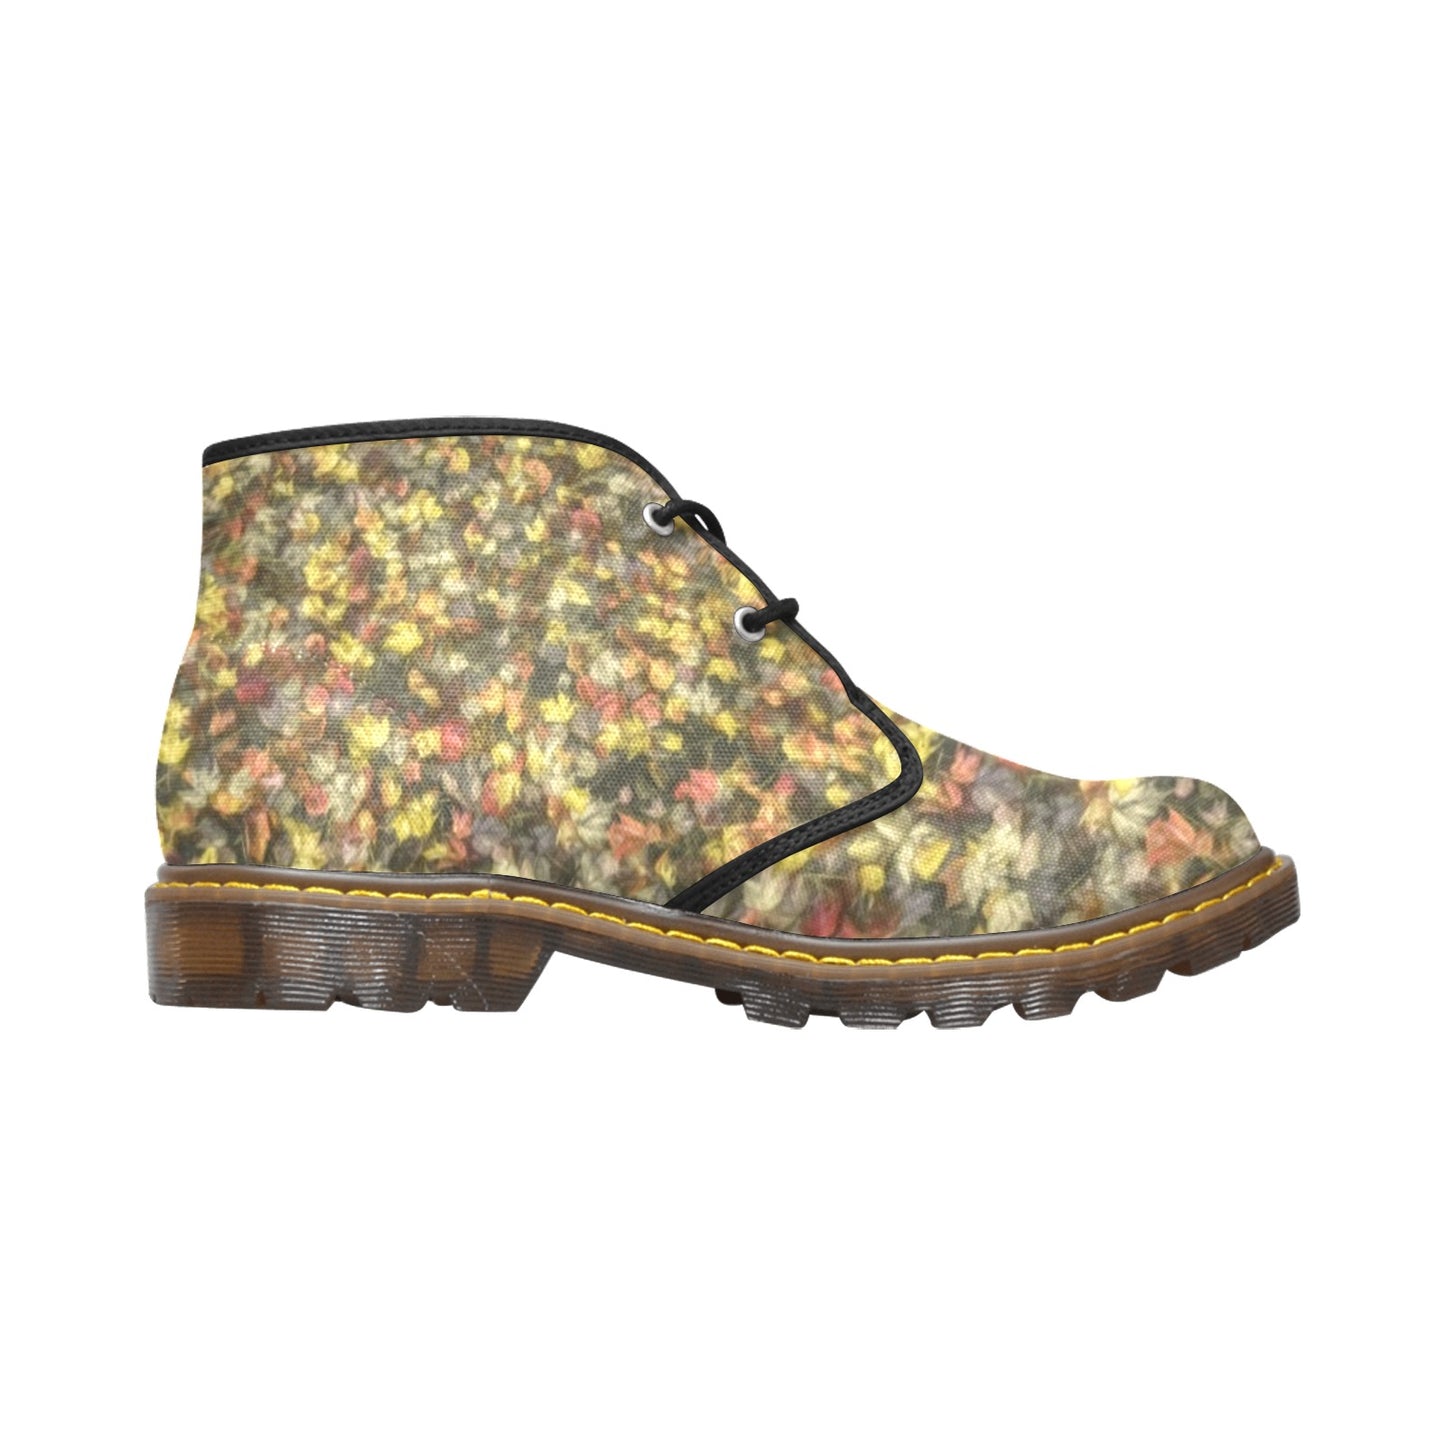 Van Gogh's Leaves of Fall Women's Canvas Chukka Boots